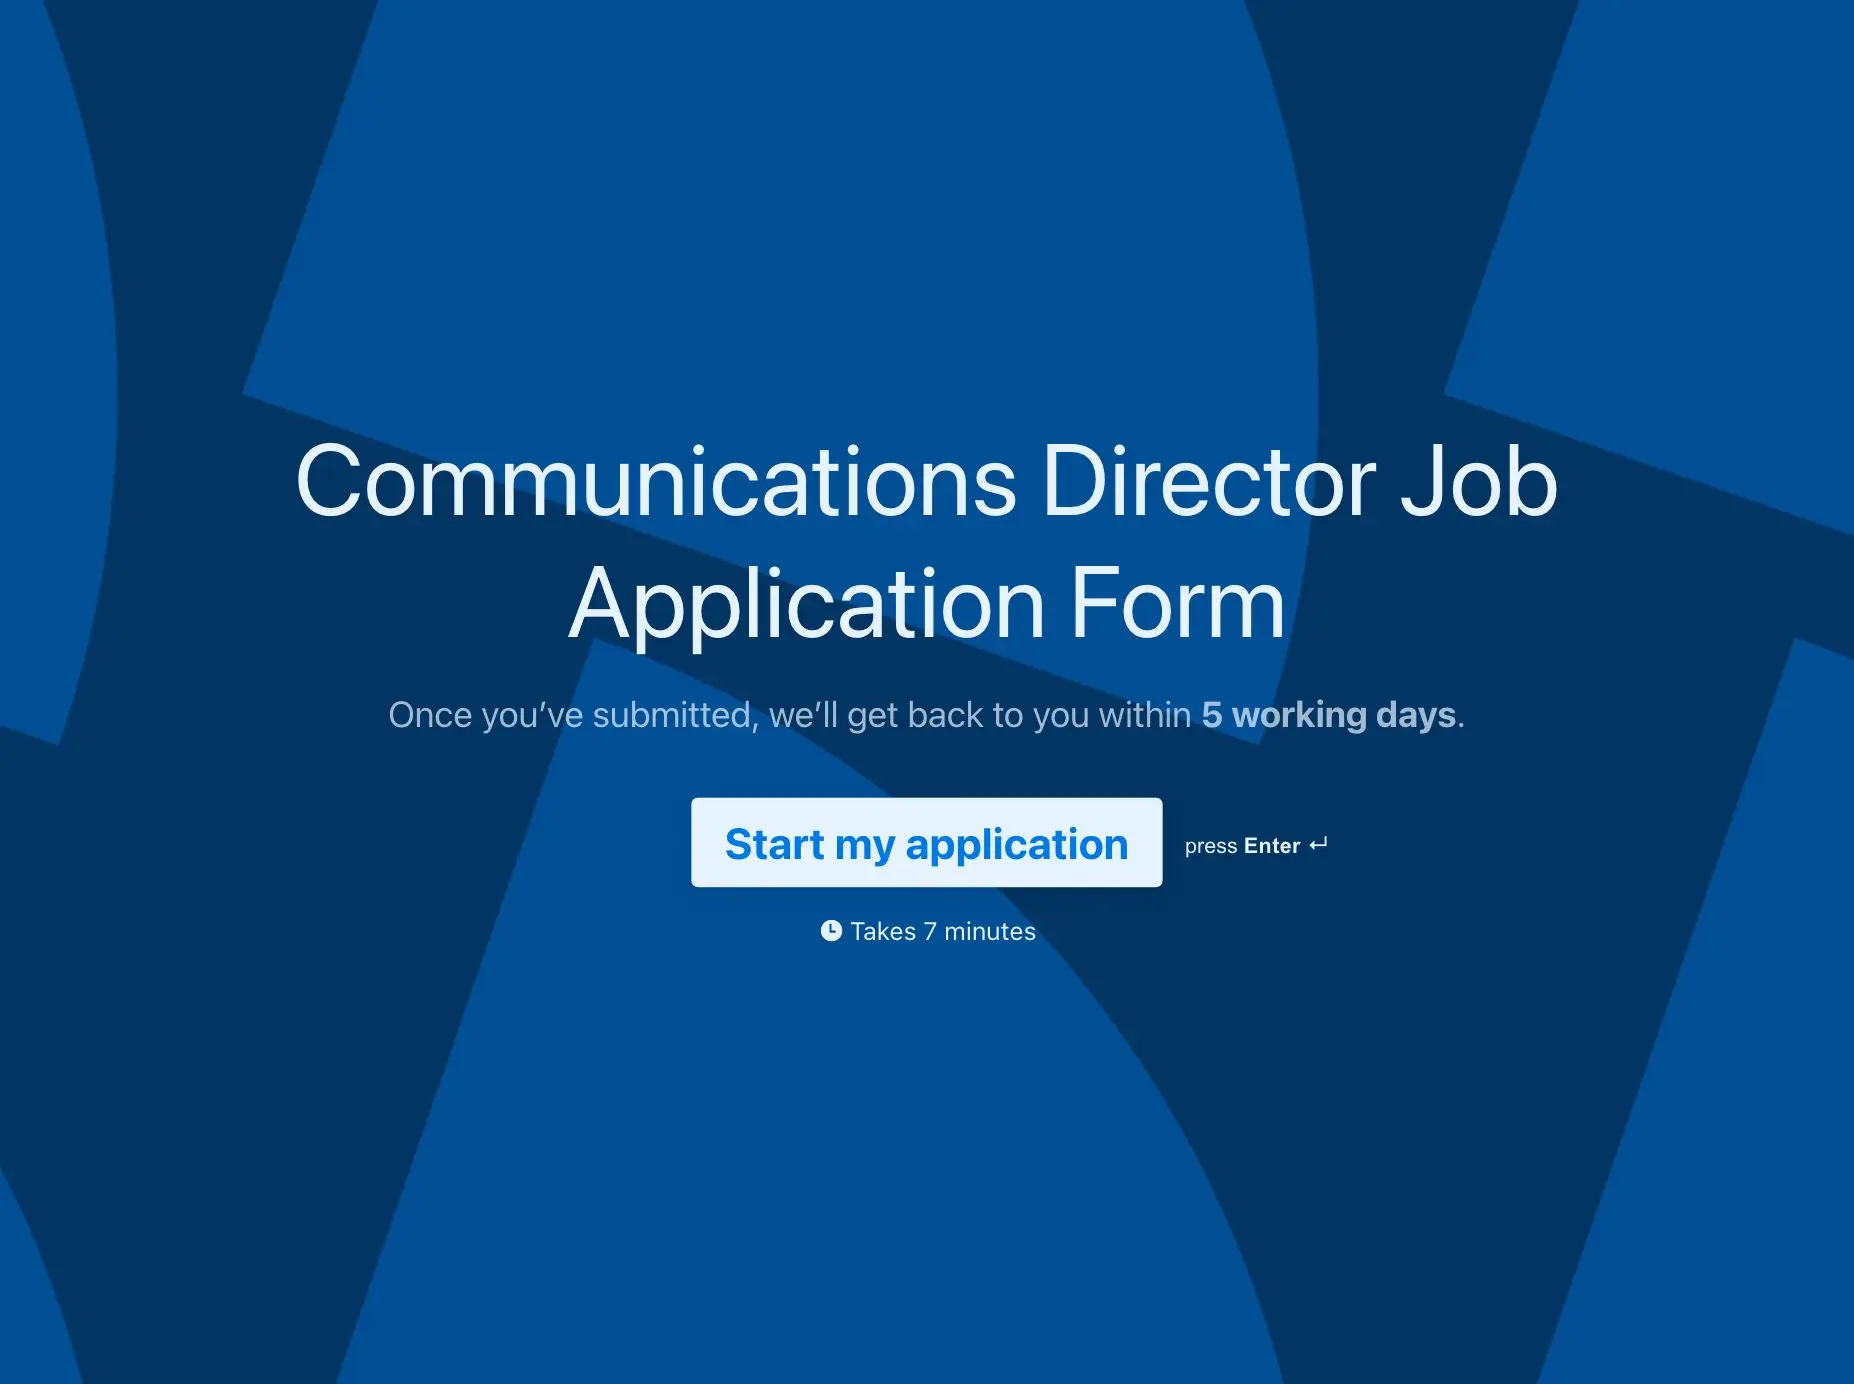 Communications Director Job Application Form Template Hero